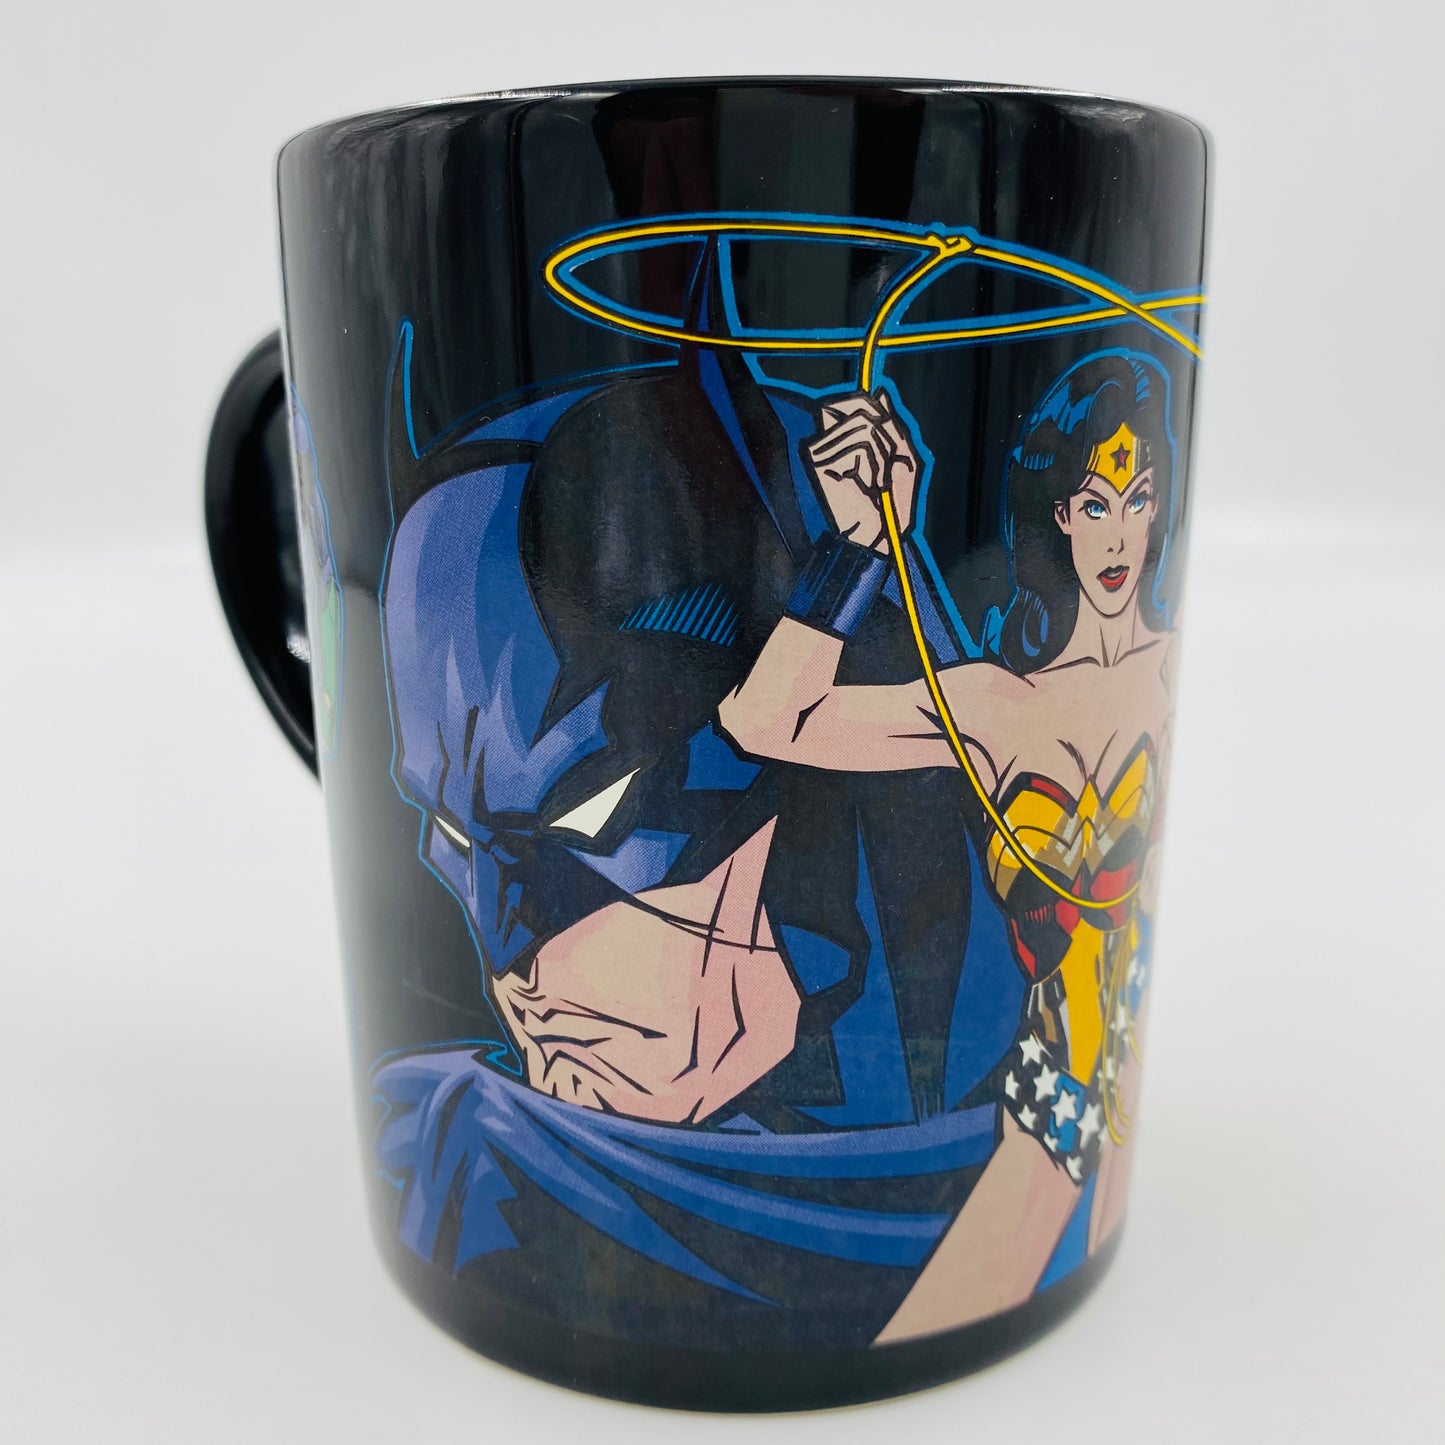 Warner Bros. Studio Store: DC Heroes coffee mug (1999) WB/DC